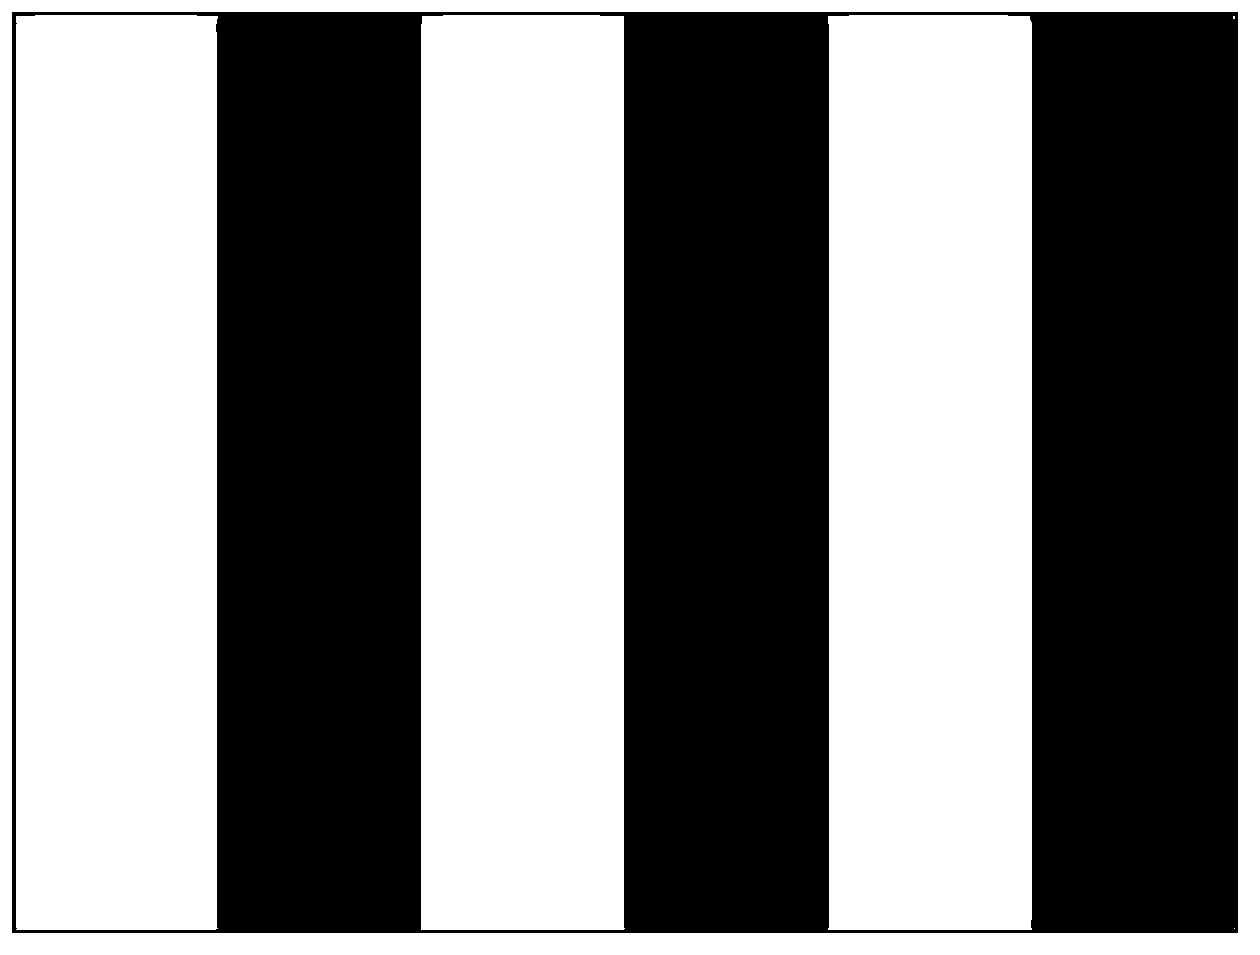 Binary stripe stack based sinusoidal grating generation method